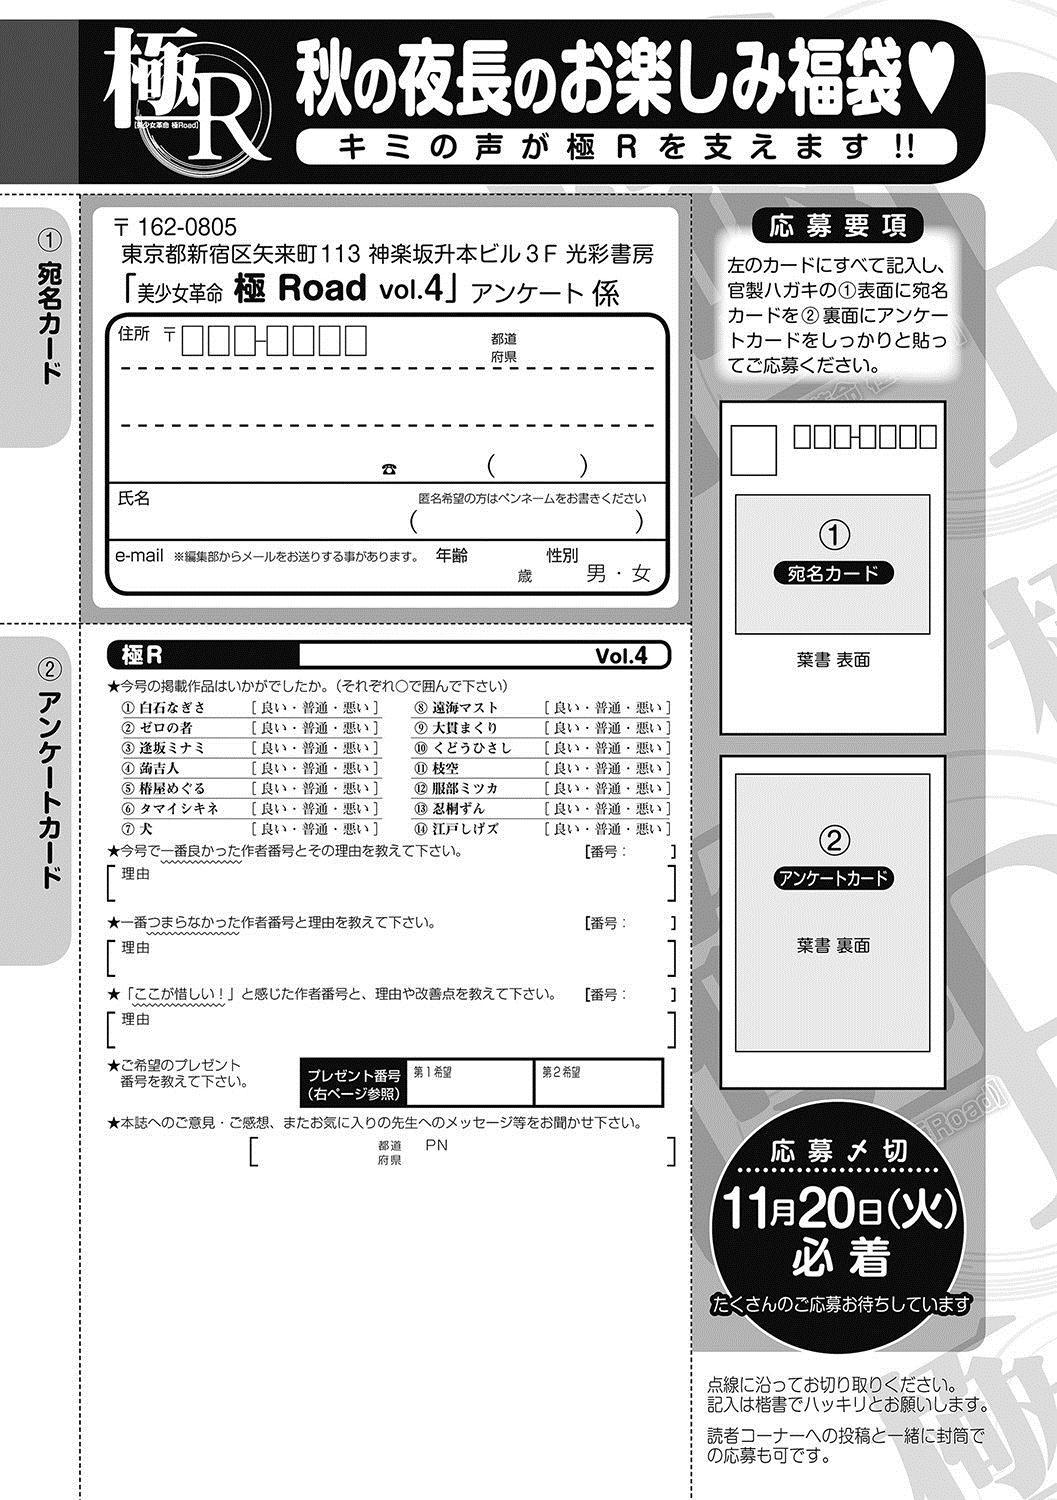 Bishoujo Kakumei KIWAME Road 2012-12 Vol.4 252